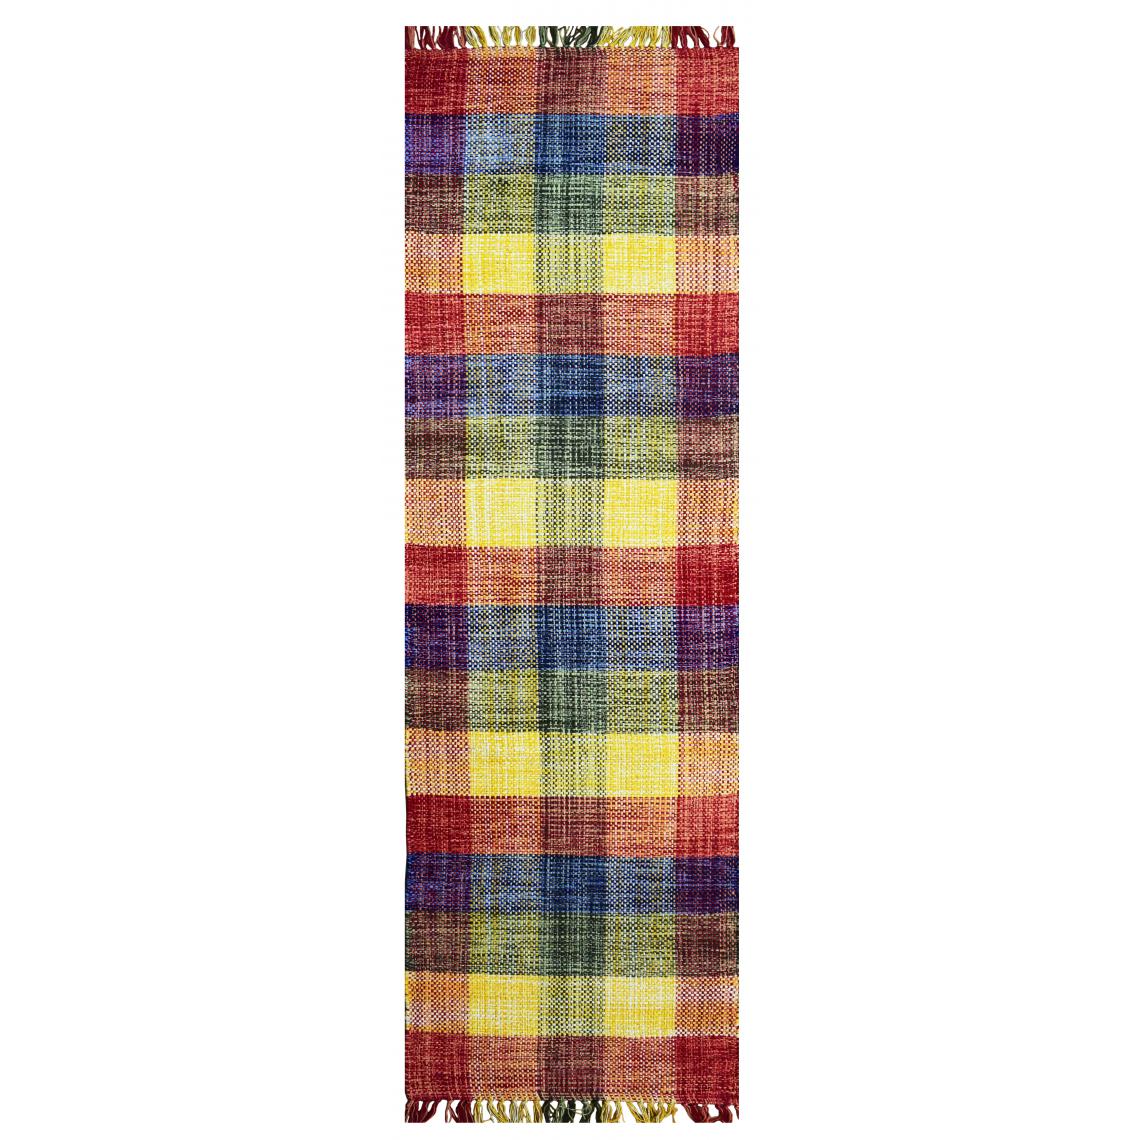 Alter - Tapis sacramento moderne, style kilim, 100% coton, multicolore, 180x60cm - Tapis